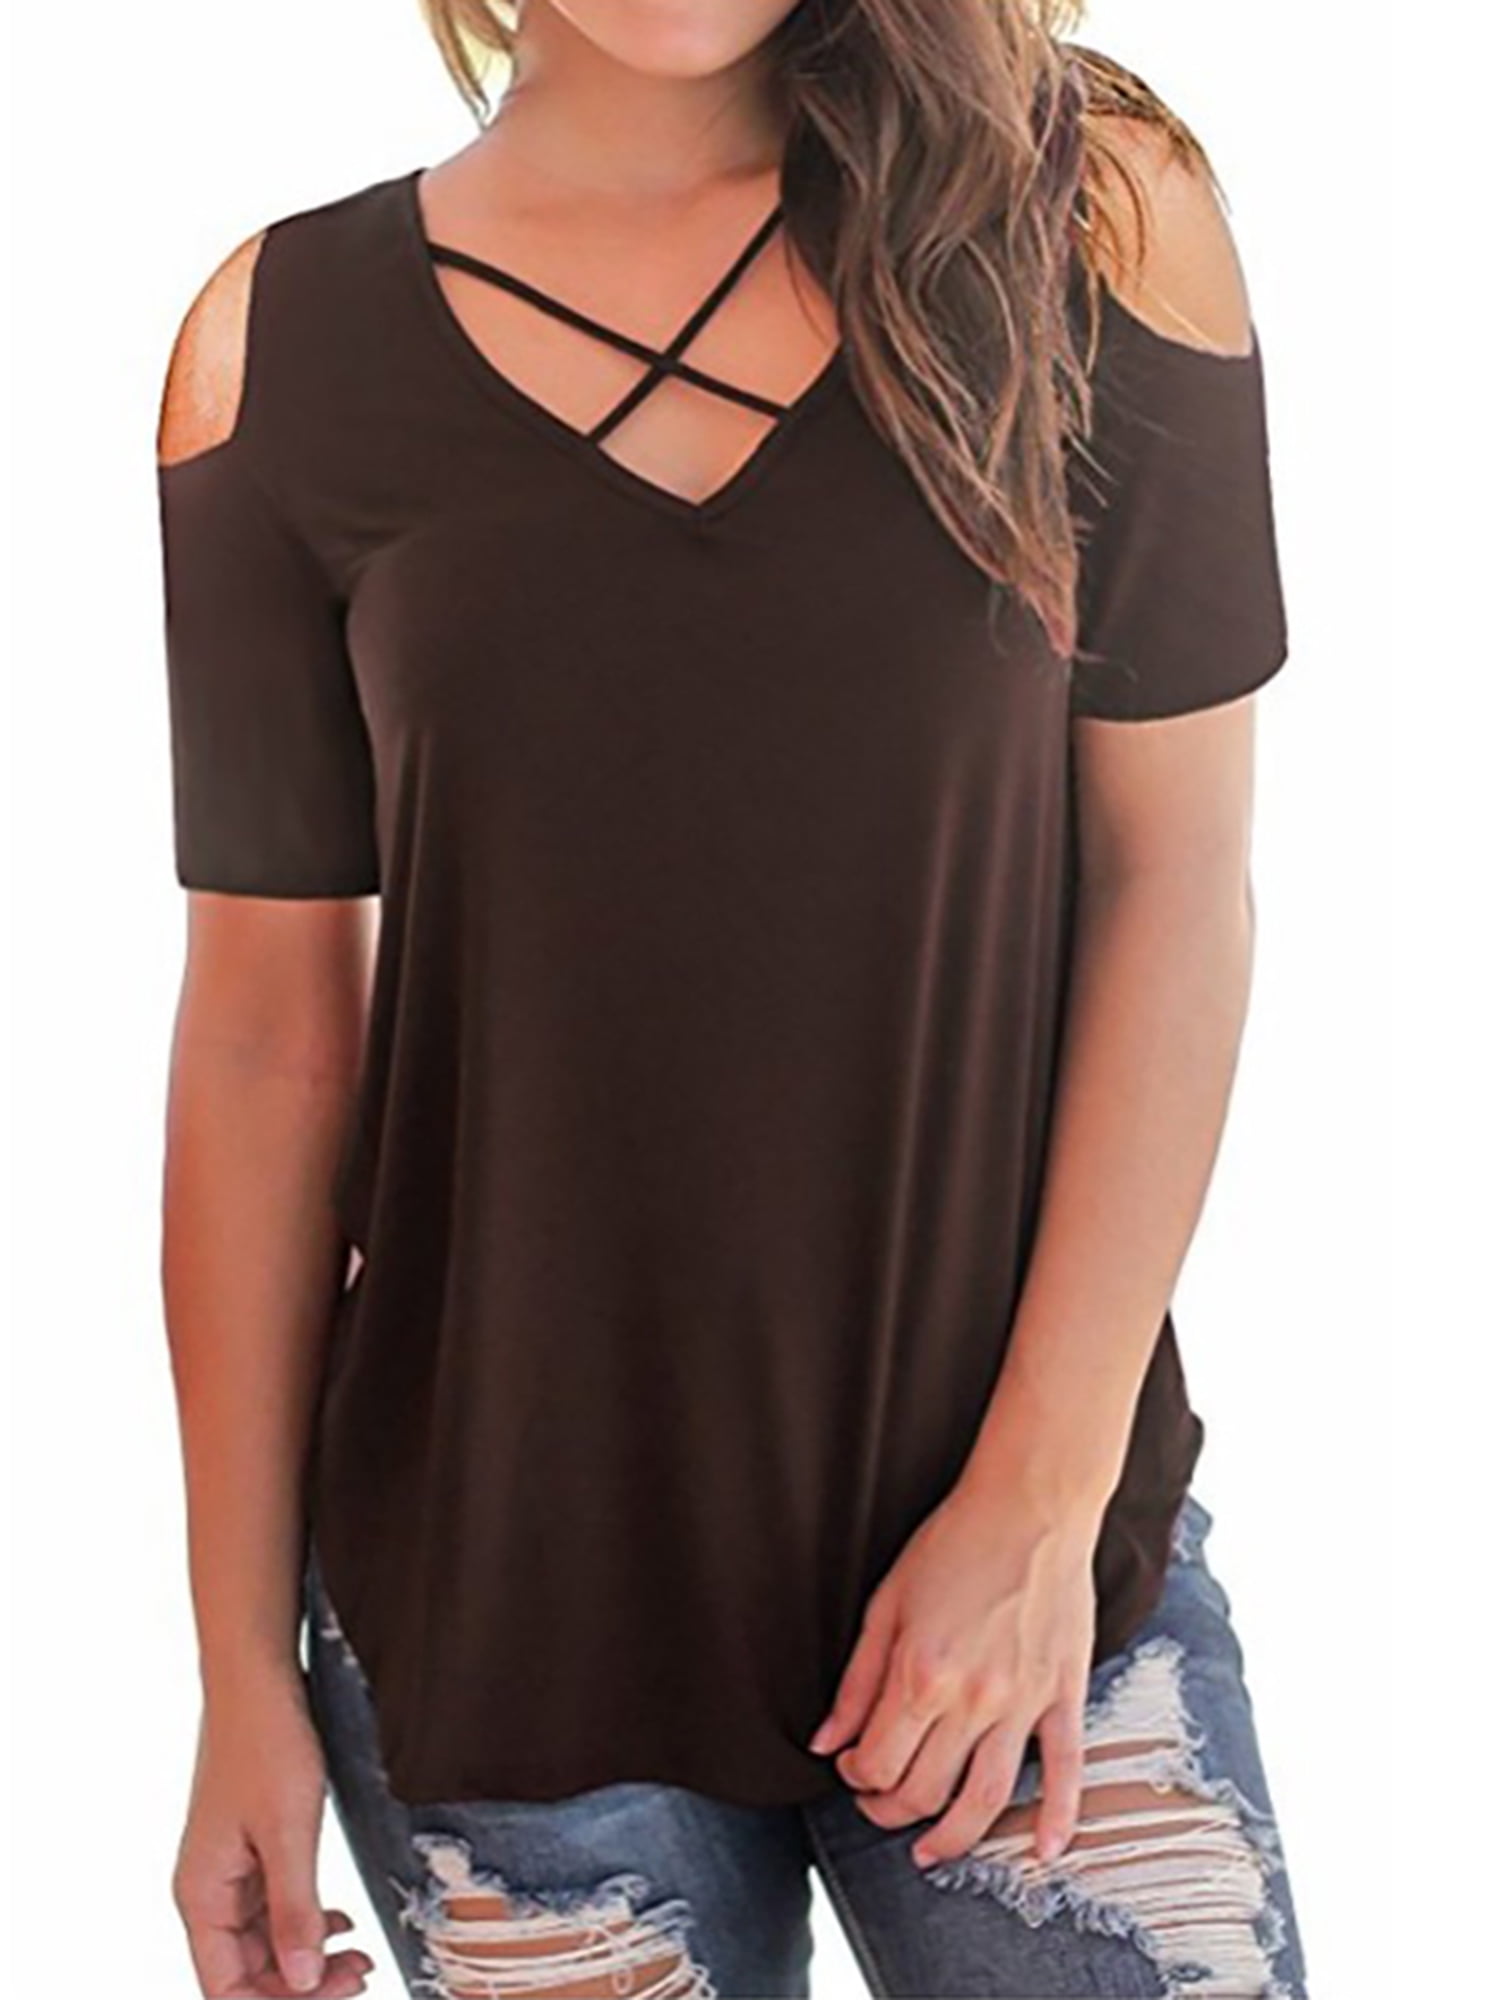 AgrinTol Women Summer Strappy Cold Shoulder T-Shirt Tops Short Sleeve Blouses